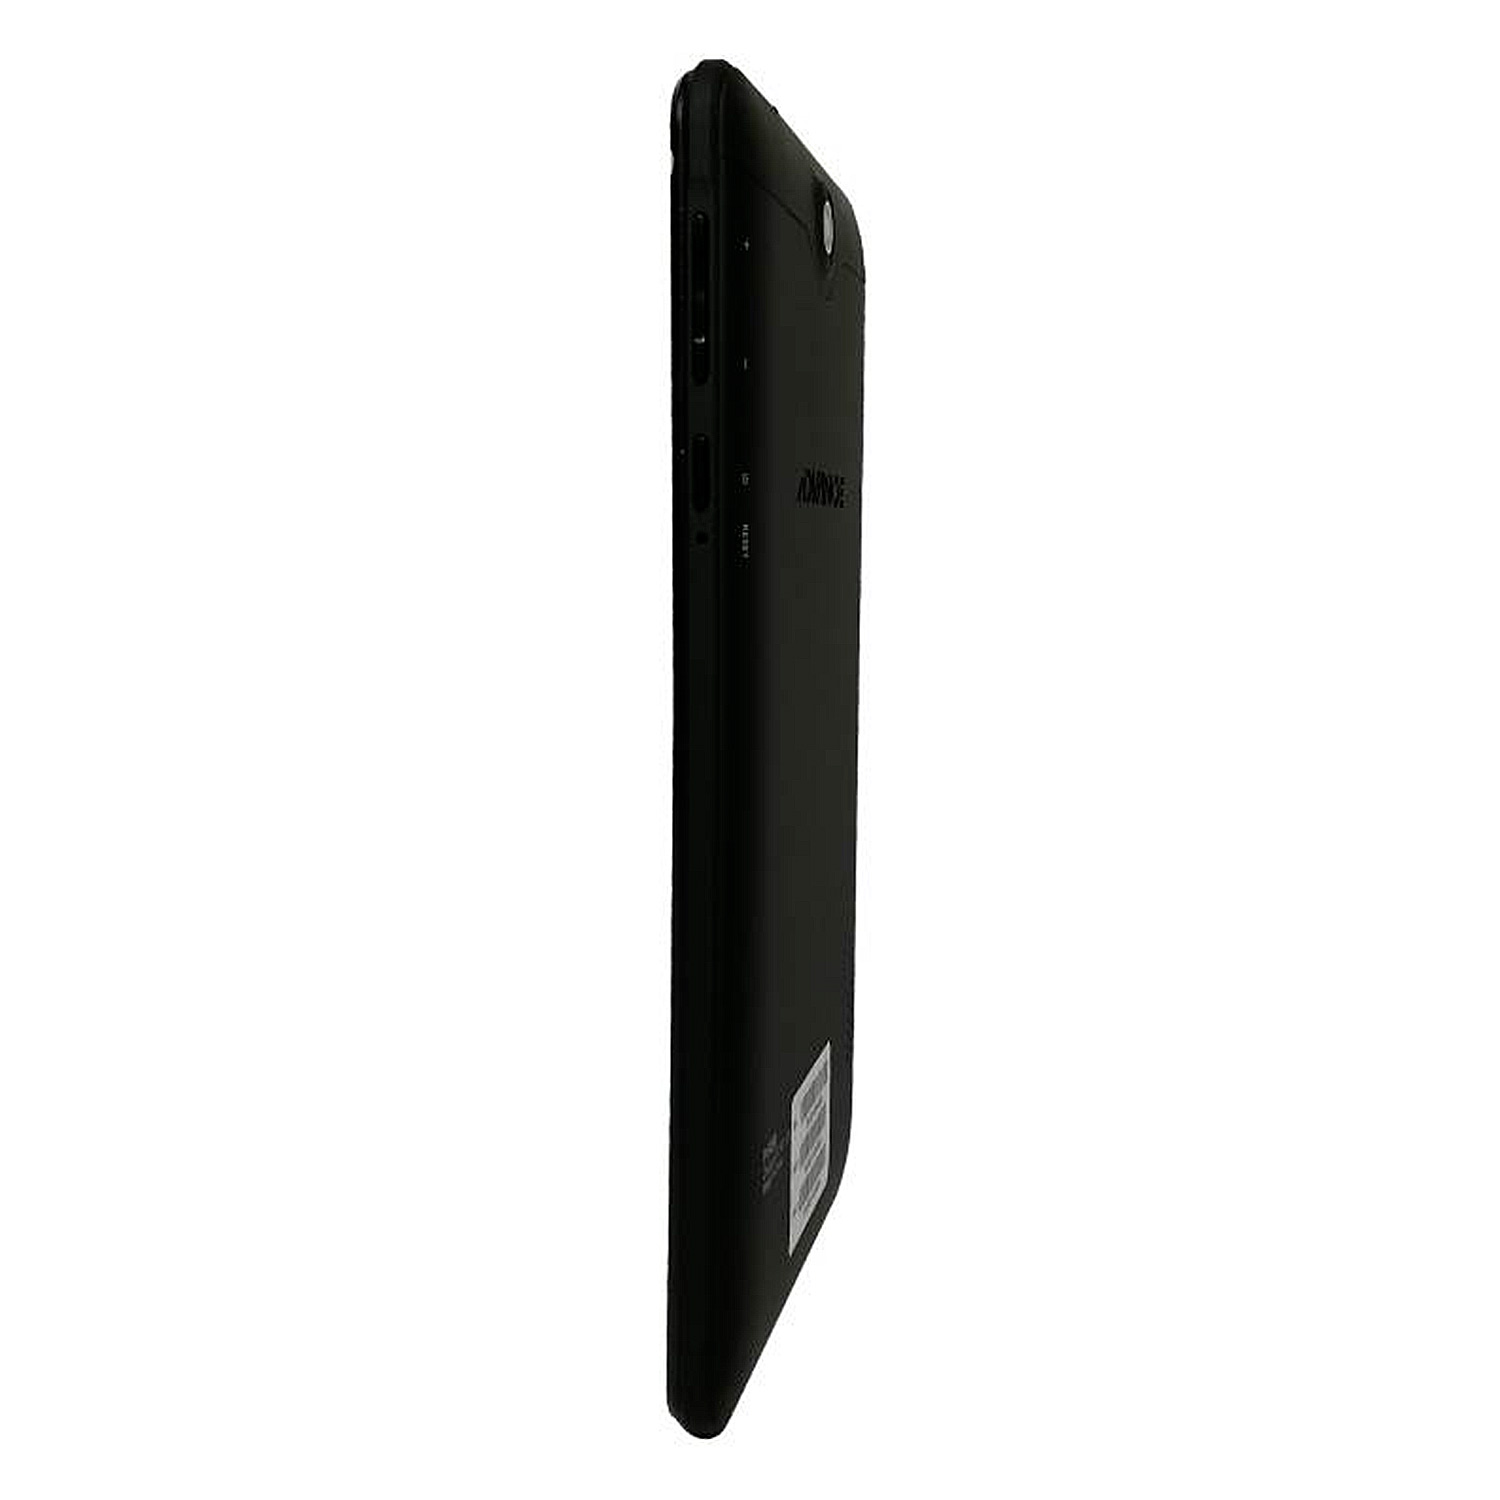 Tablet Advance Prime PR5850 Tela 7" 16GB 1GB RAM - Preto